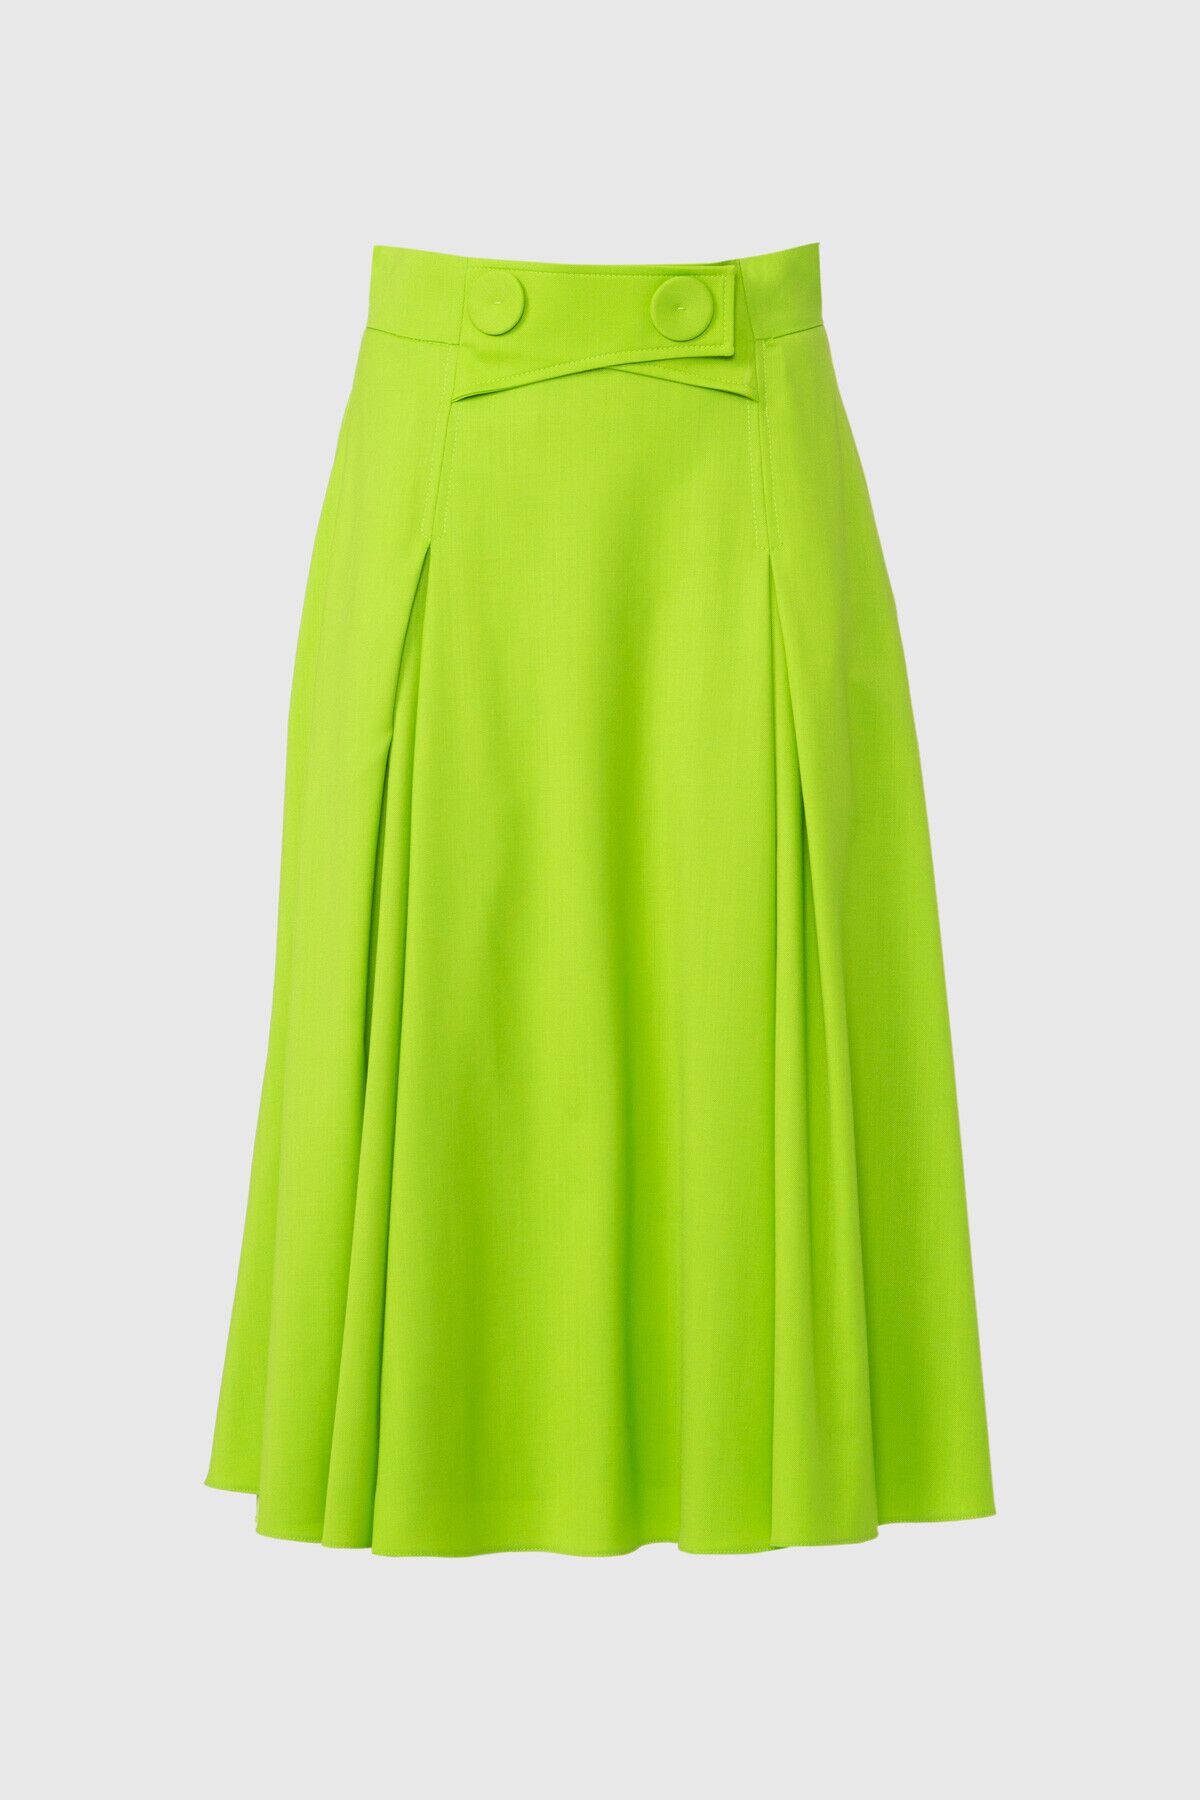  GIZIA - High Waist Button Detailed Midi Length Green Skirt